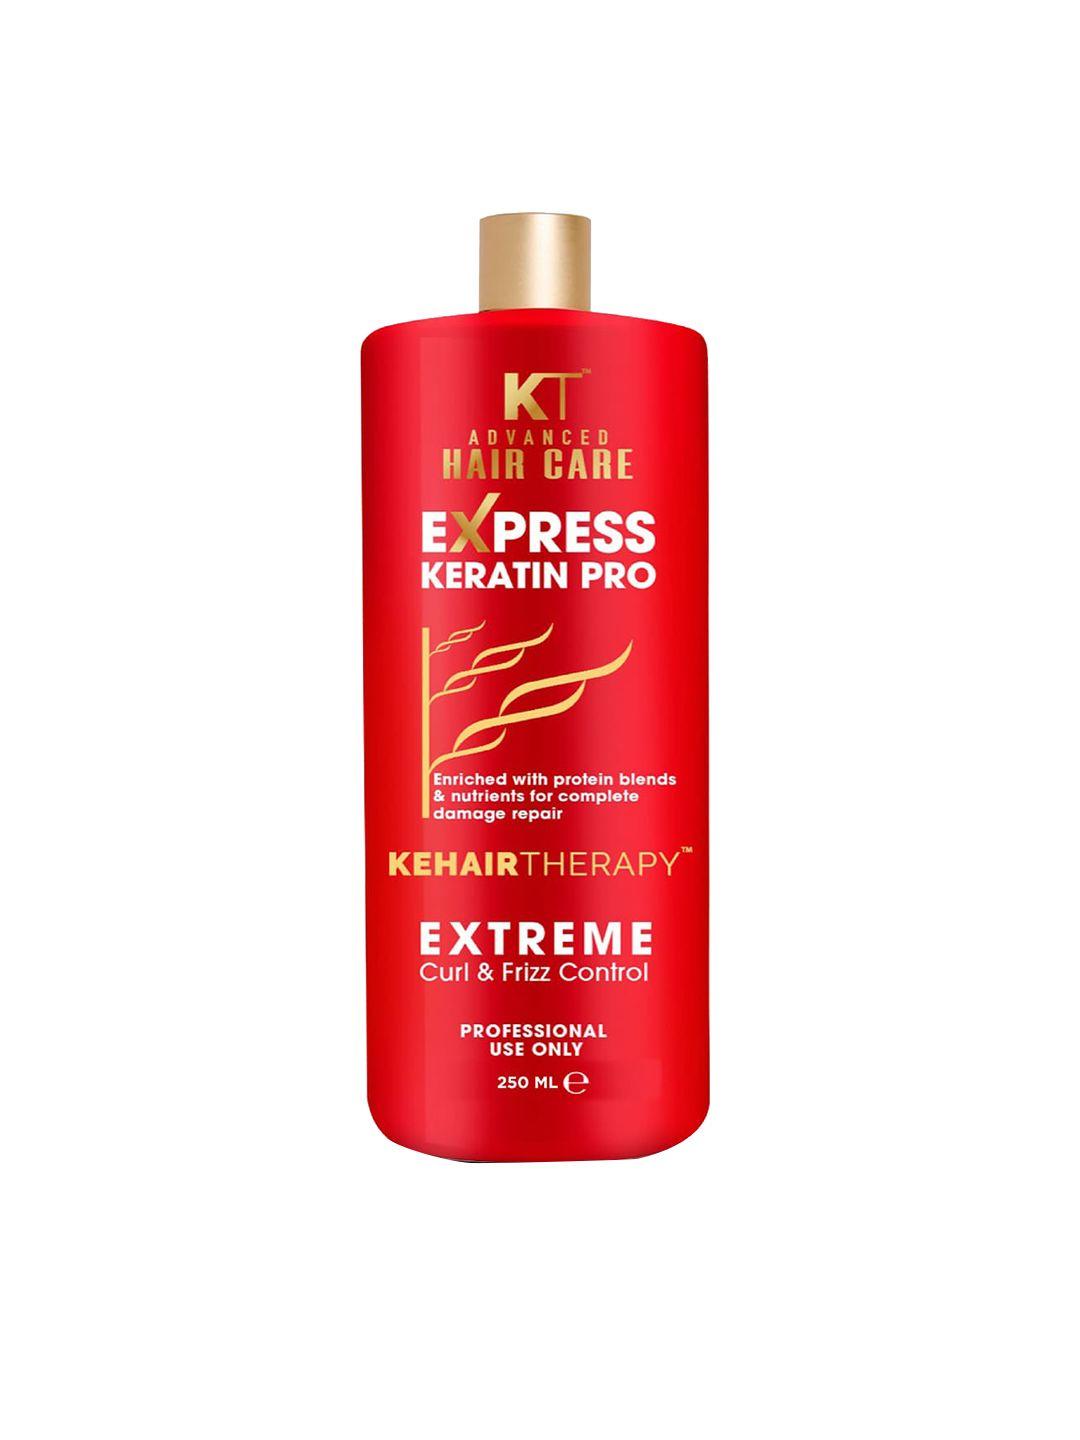 KEHAIRTHERAPY Advanced Haircare Express Keratin Pro Hair Treatment - 250 ml